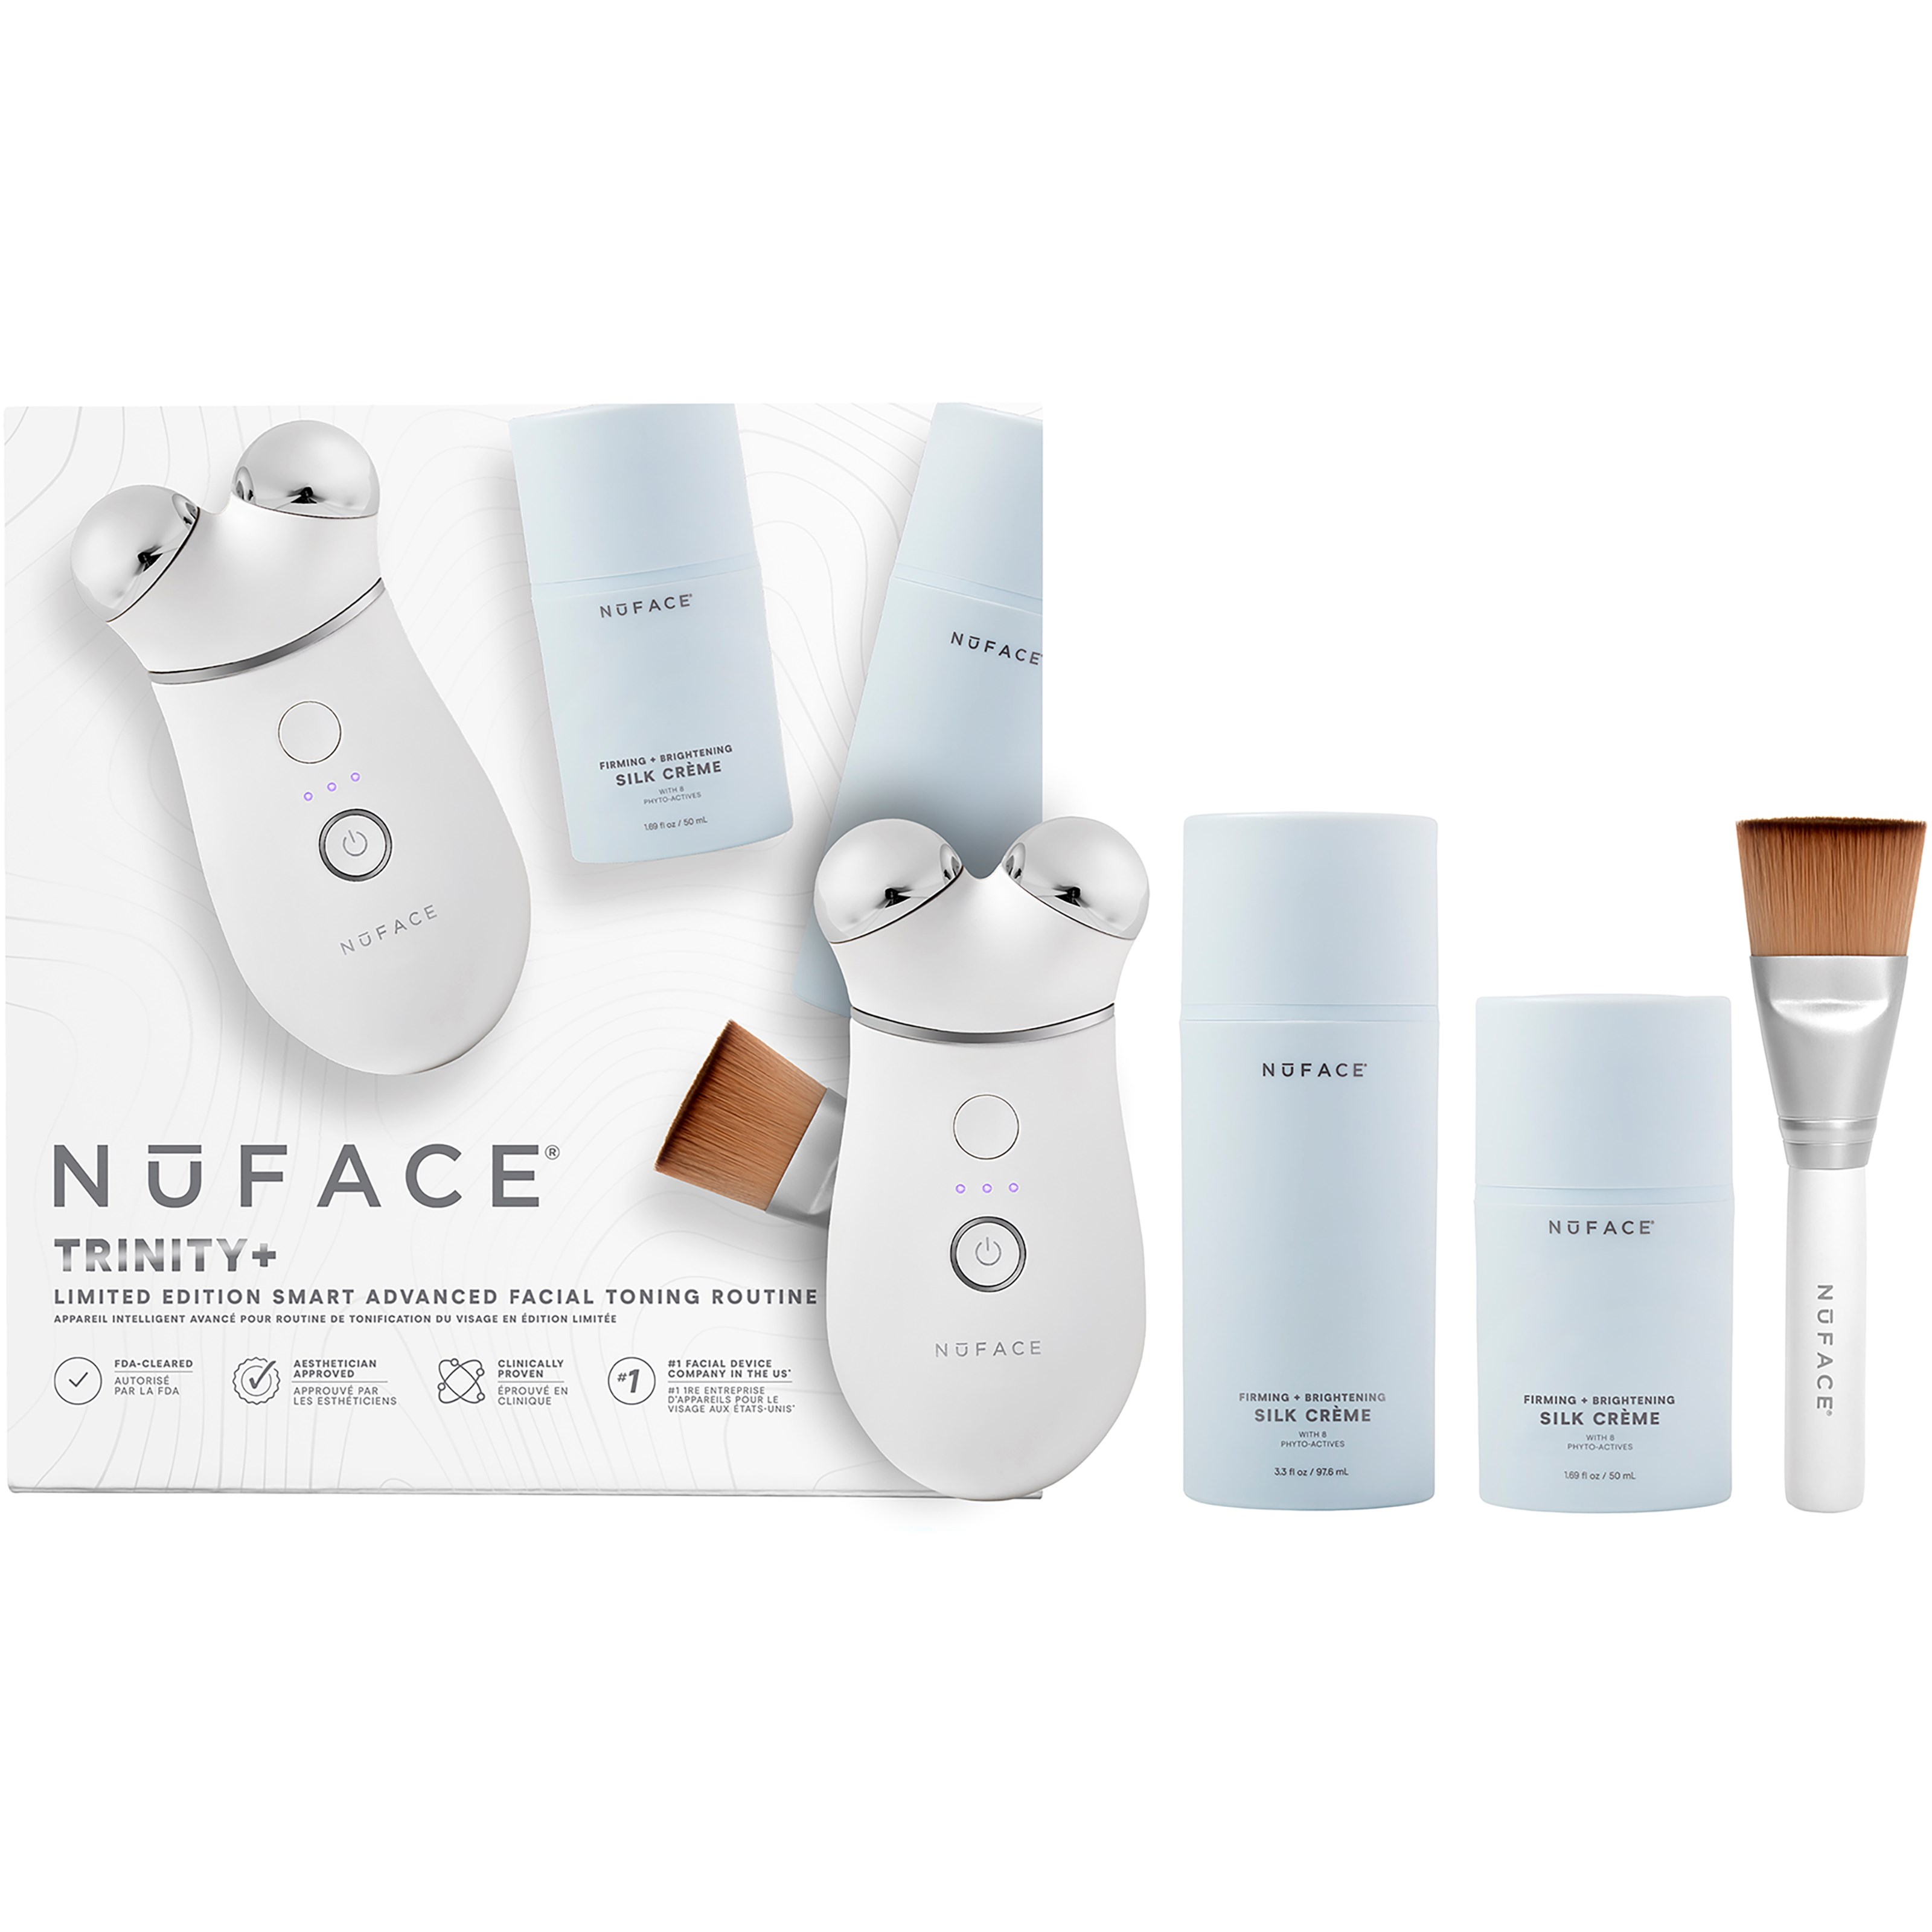 Bilde av Nuface Trinity+ Facial Toning Device Limited Edition Kit